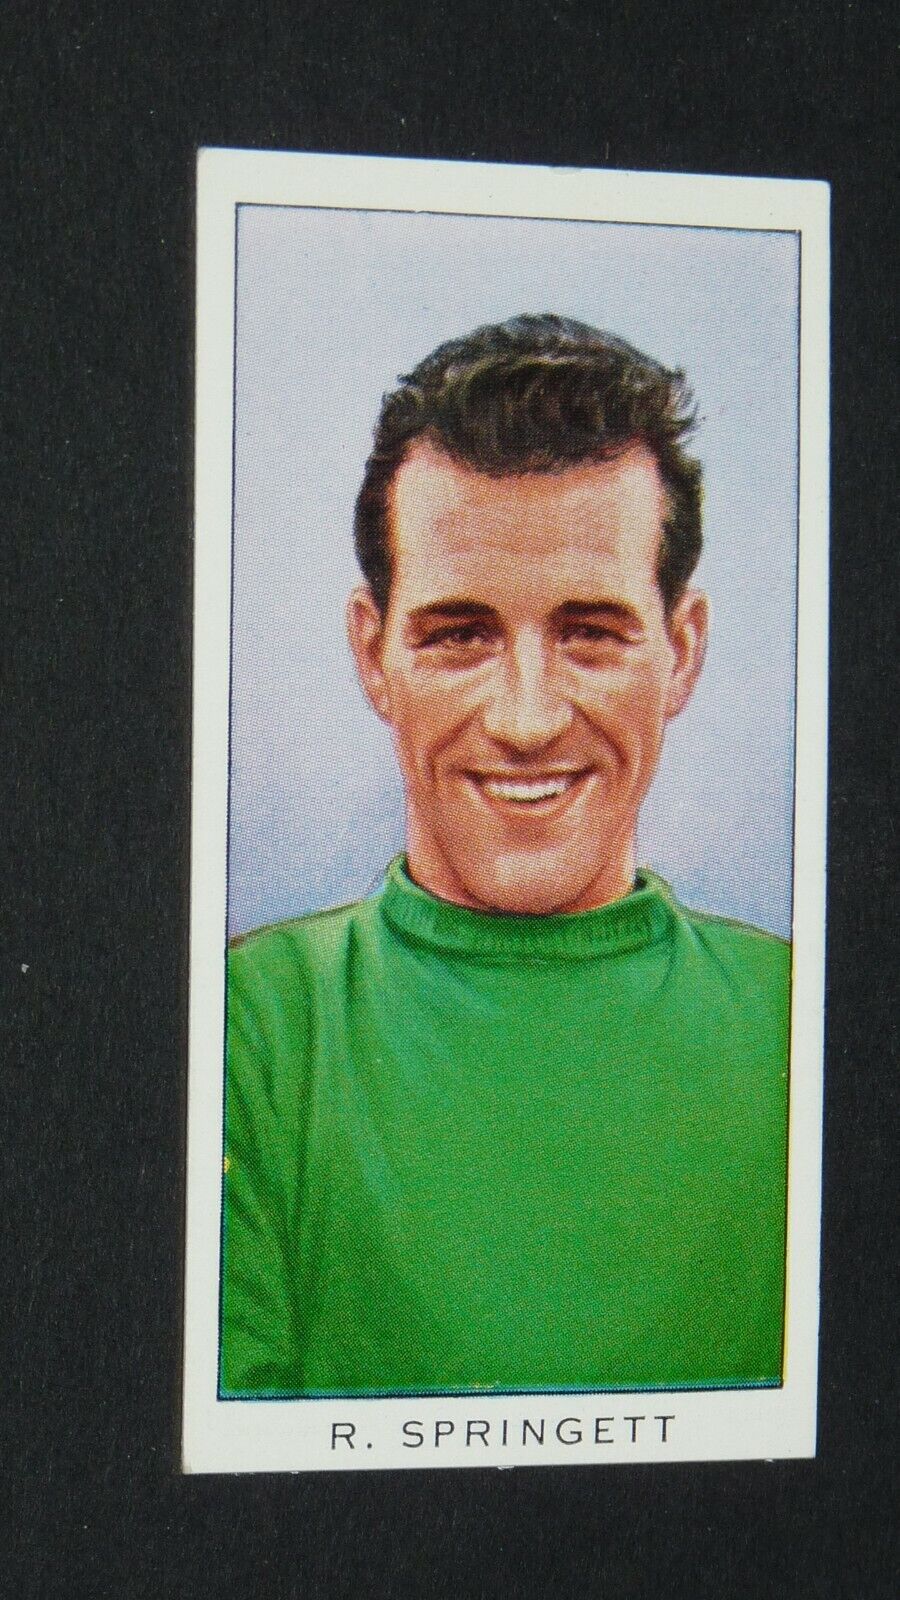 1961 FOOTBALL KELLOGG CARD #11 RON SPRINGETT SHEFFIELD WEDNESDAY OWLS ENGLAND